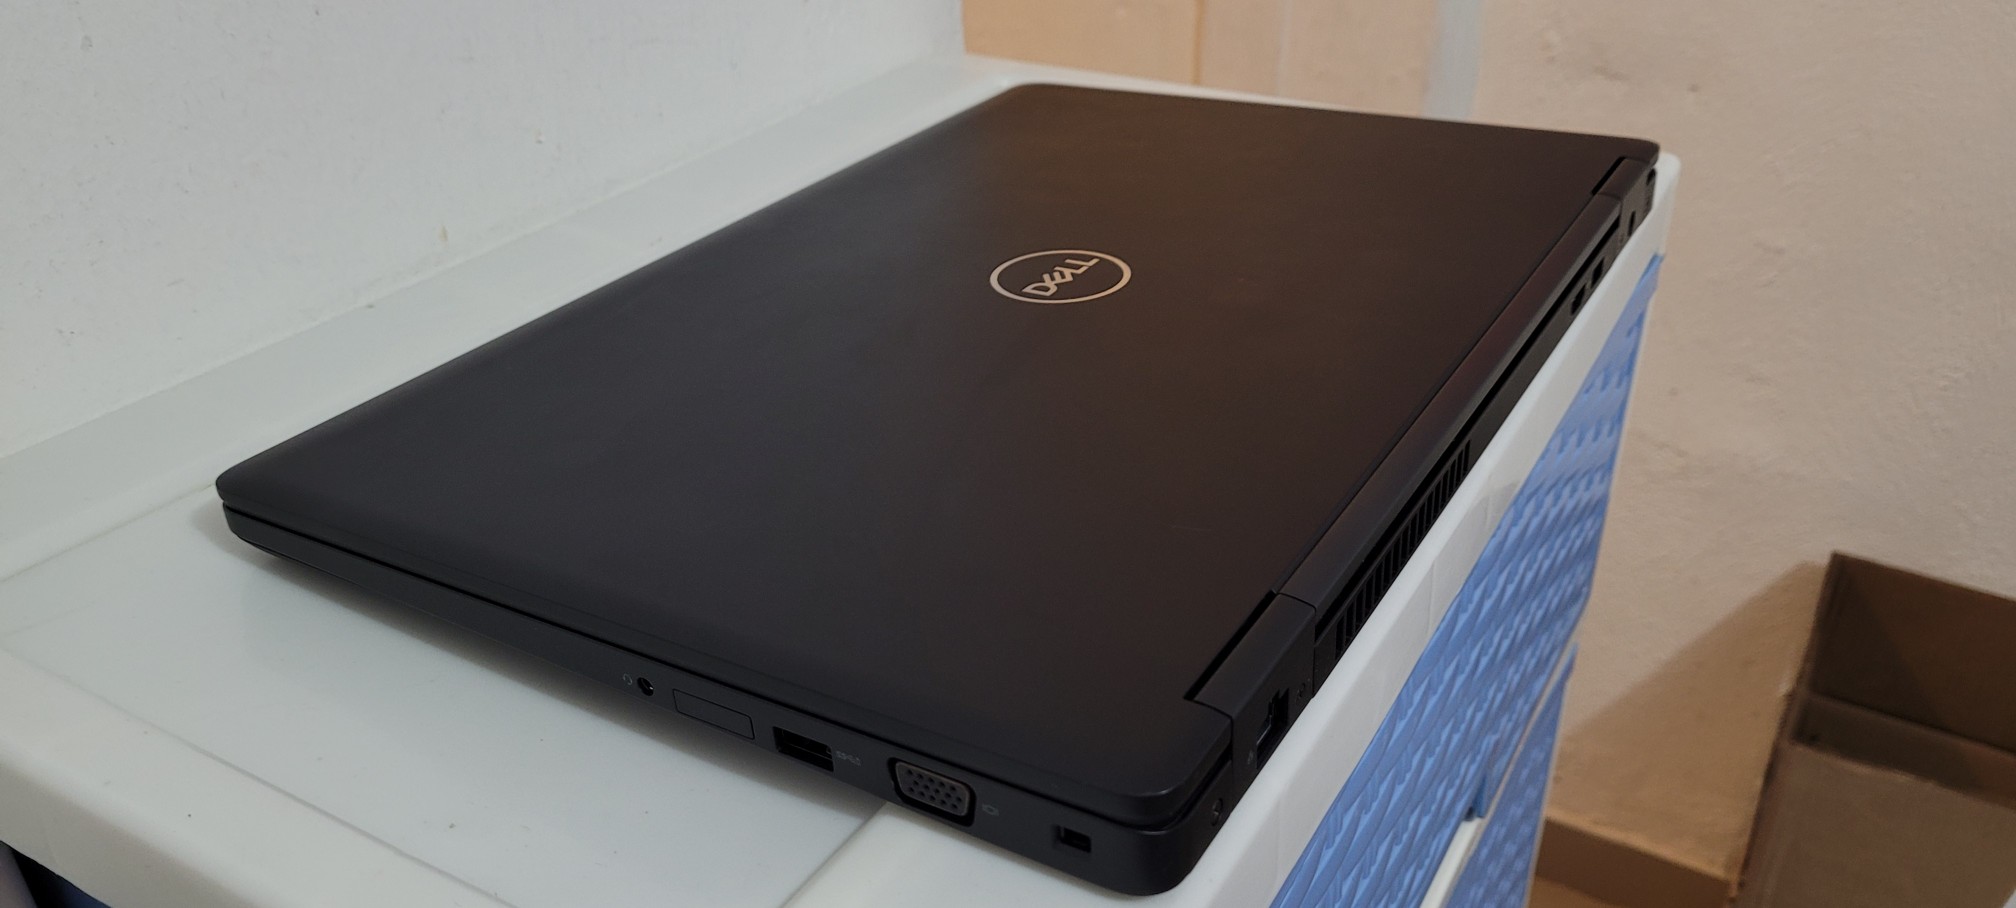 computadoras y laptops - Dell 5591 17 Pulg Core i7 8va Gen Ram 16gb ddr4 Disco Solido Nvidea 2gb Dedicada 2